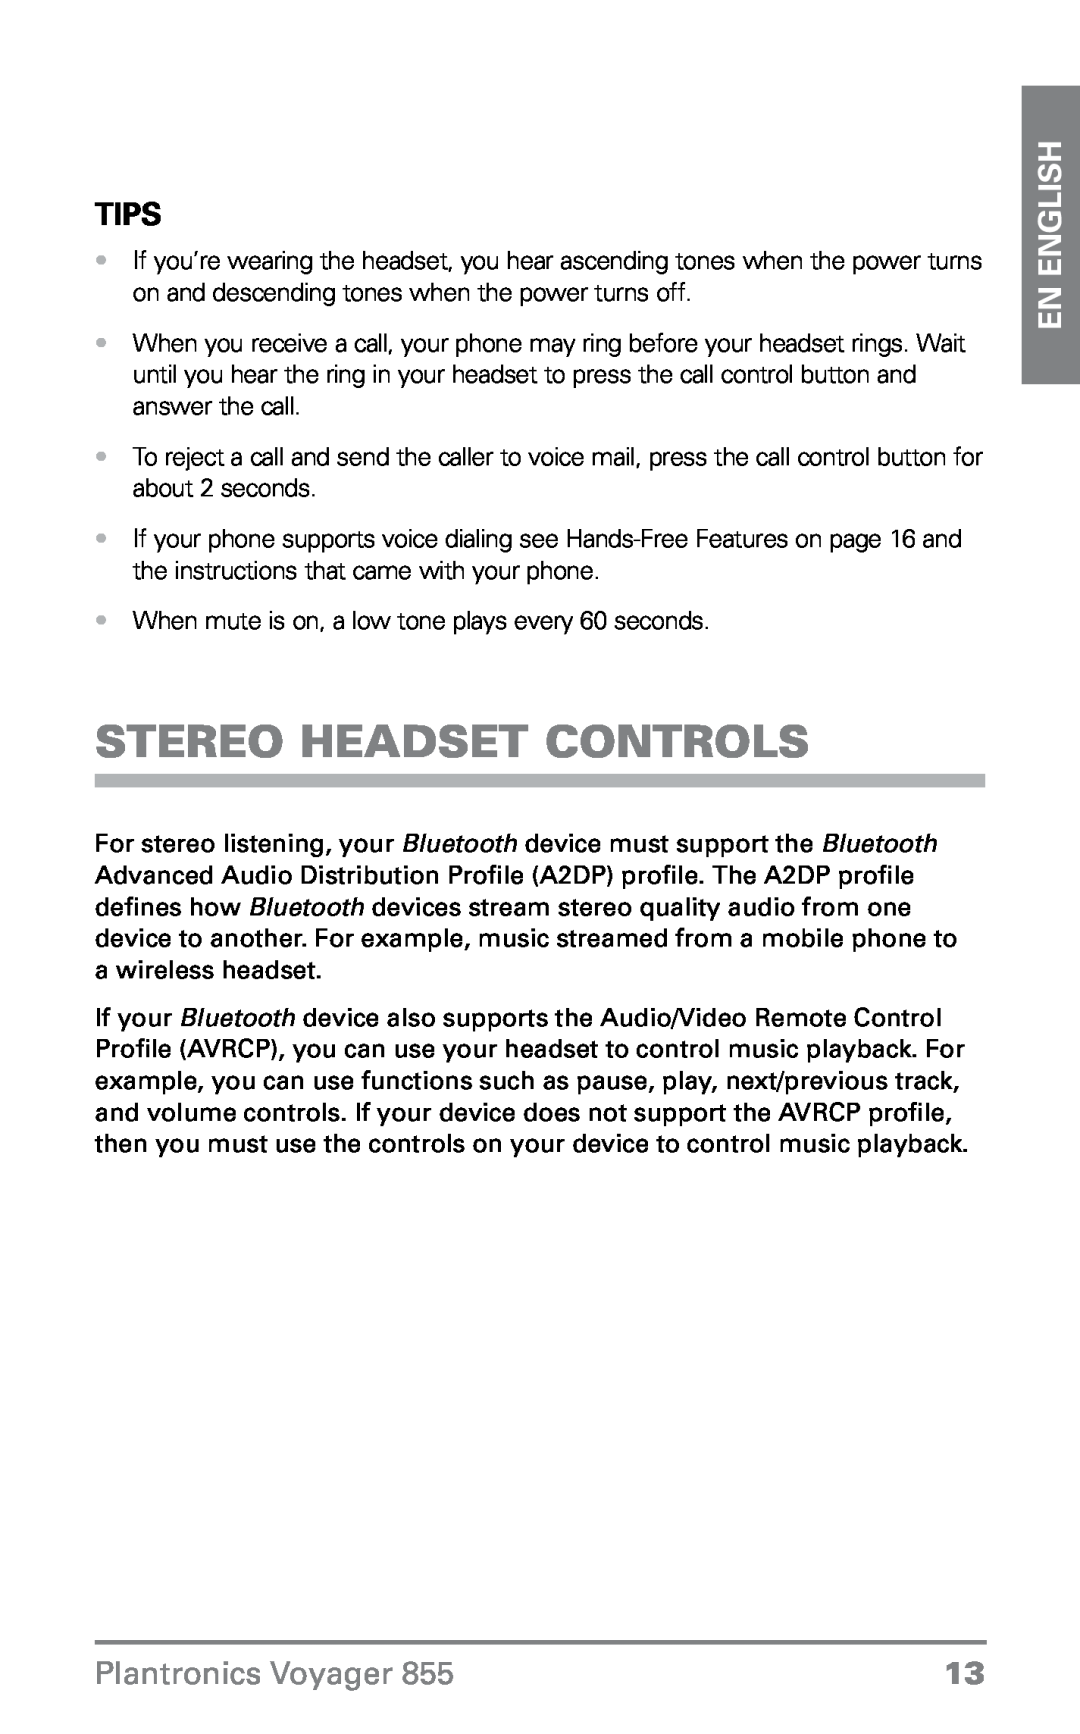 Plantronics VOYAGER855 manual Stereo Headset Controls, Tips, En English, Plantronics Voyager 